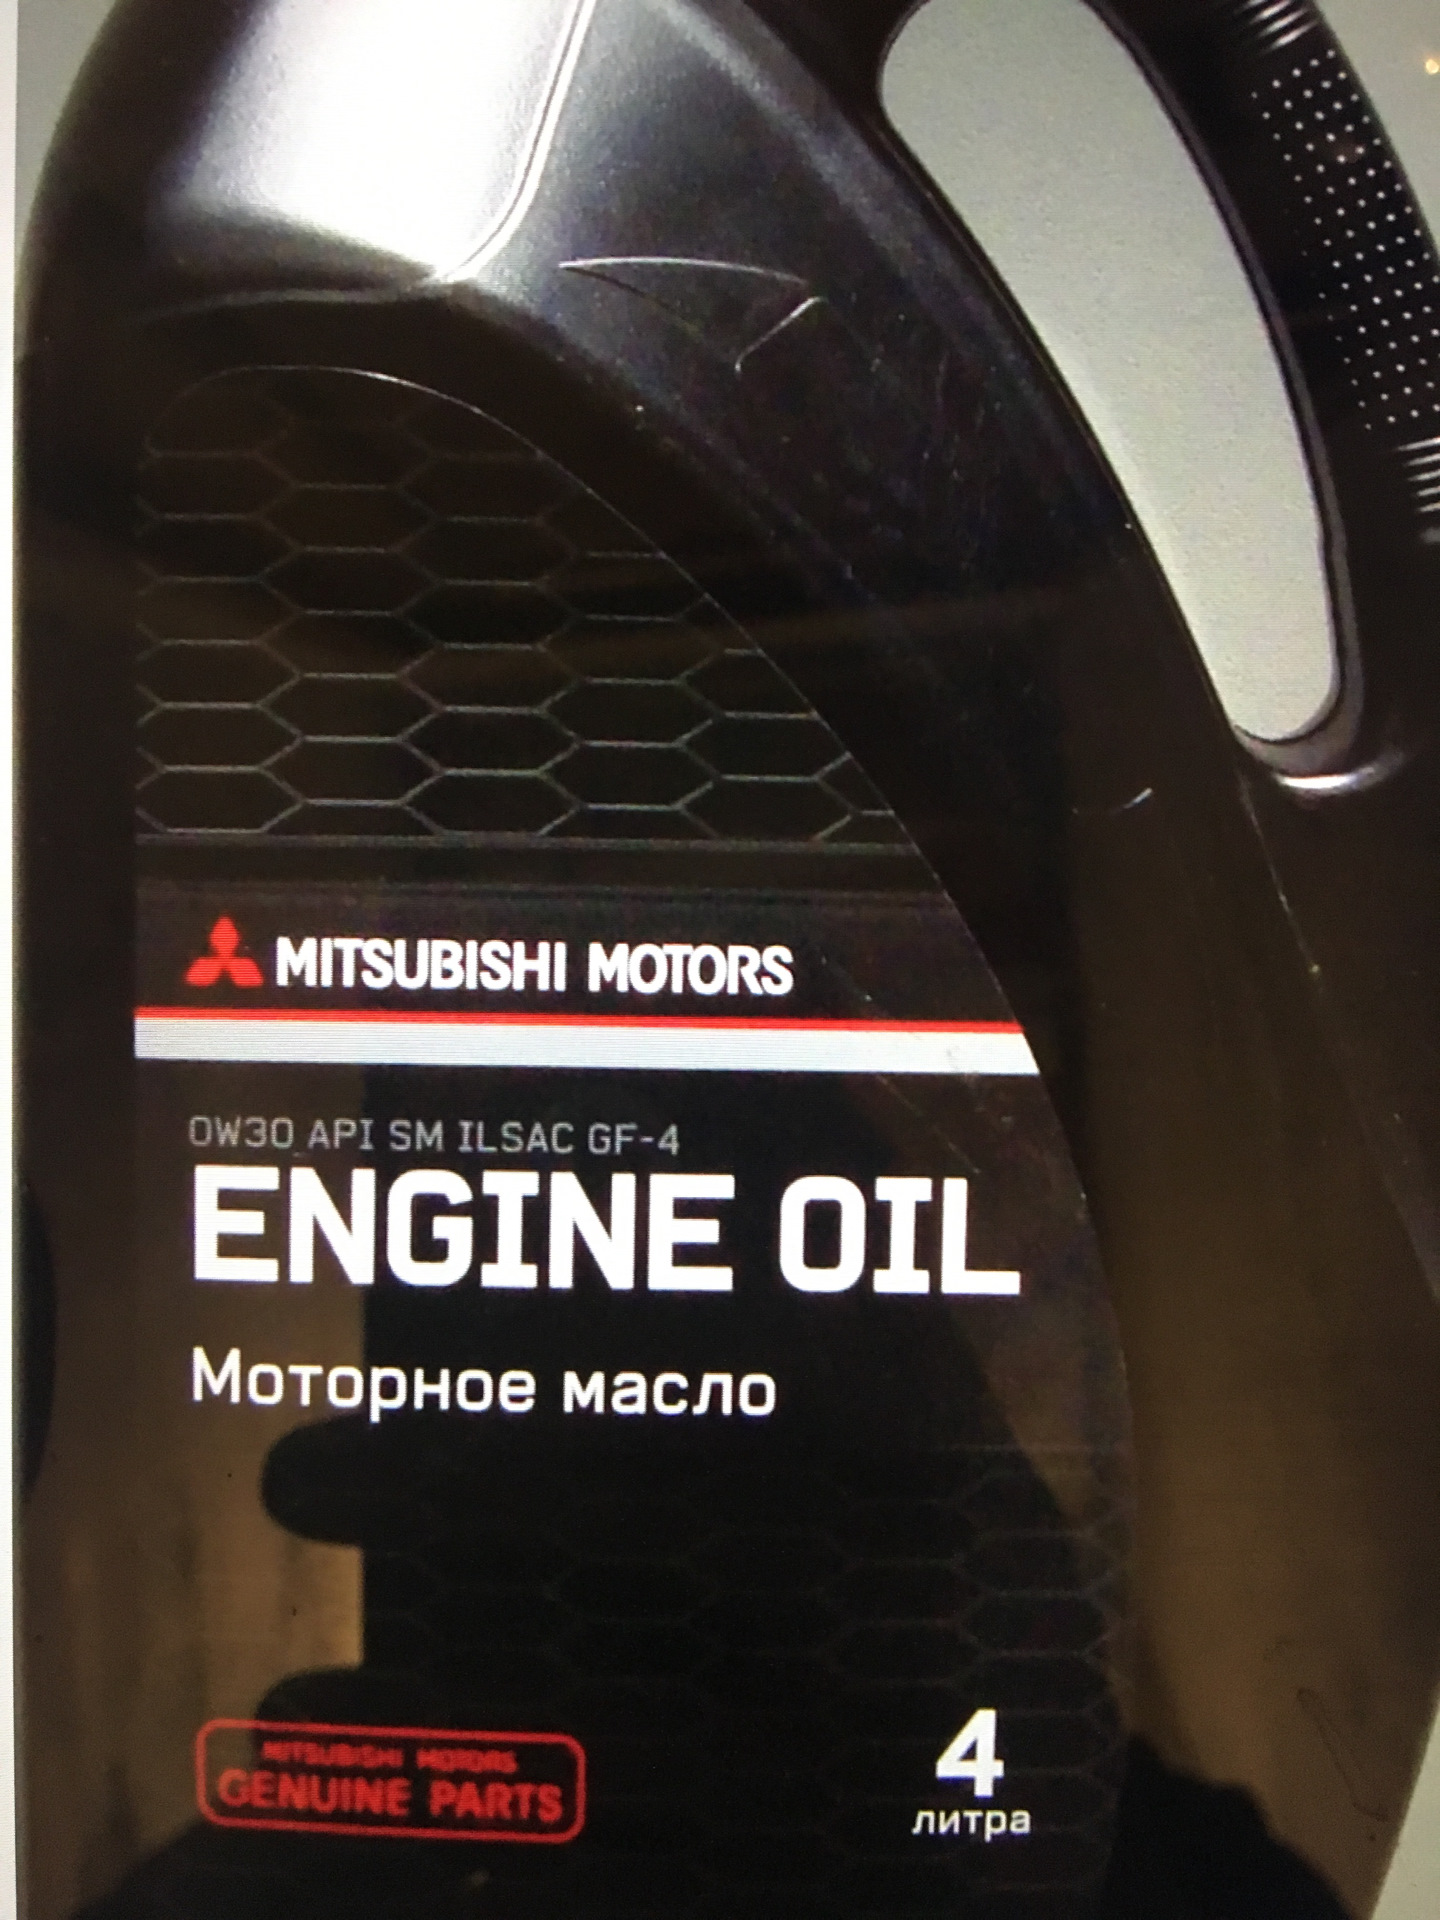 Масло мицубиси 9. Масло моторное Mitsubishi 0w30. Моторное масло Mitsubishi синтетика 0w30. Моторное масло для Мицубиси Лансер 10. Engine Oil моторное масло Митсубиси 4 литра.